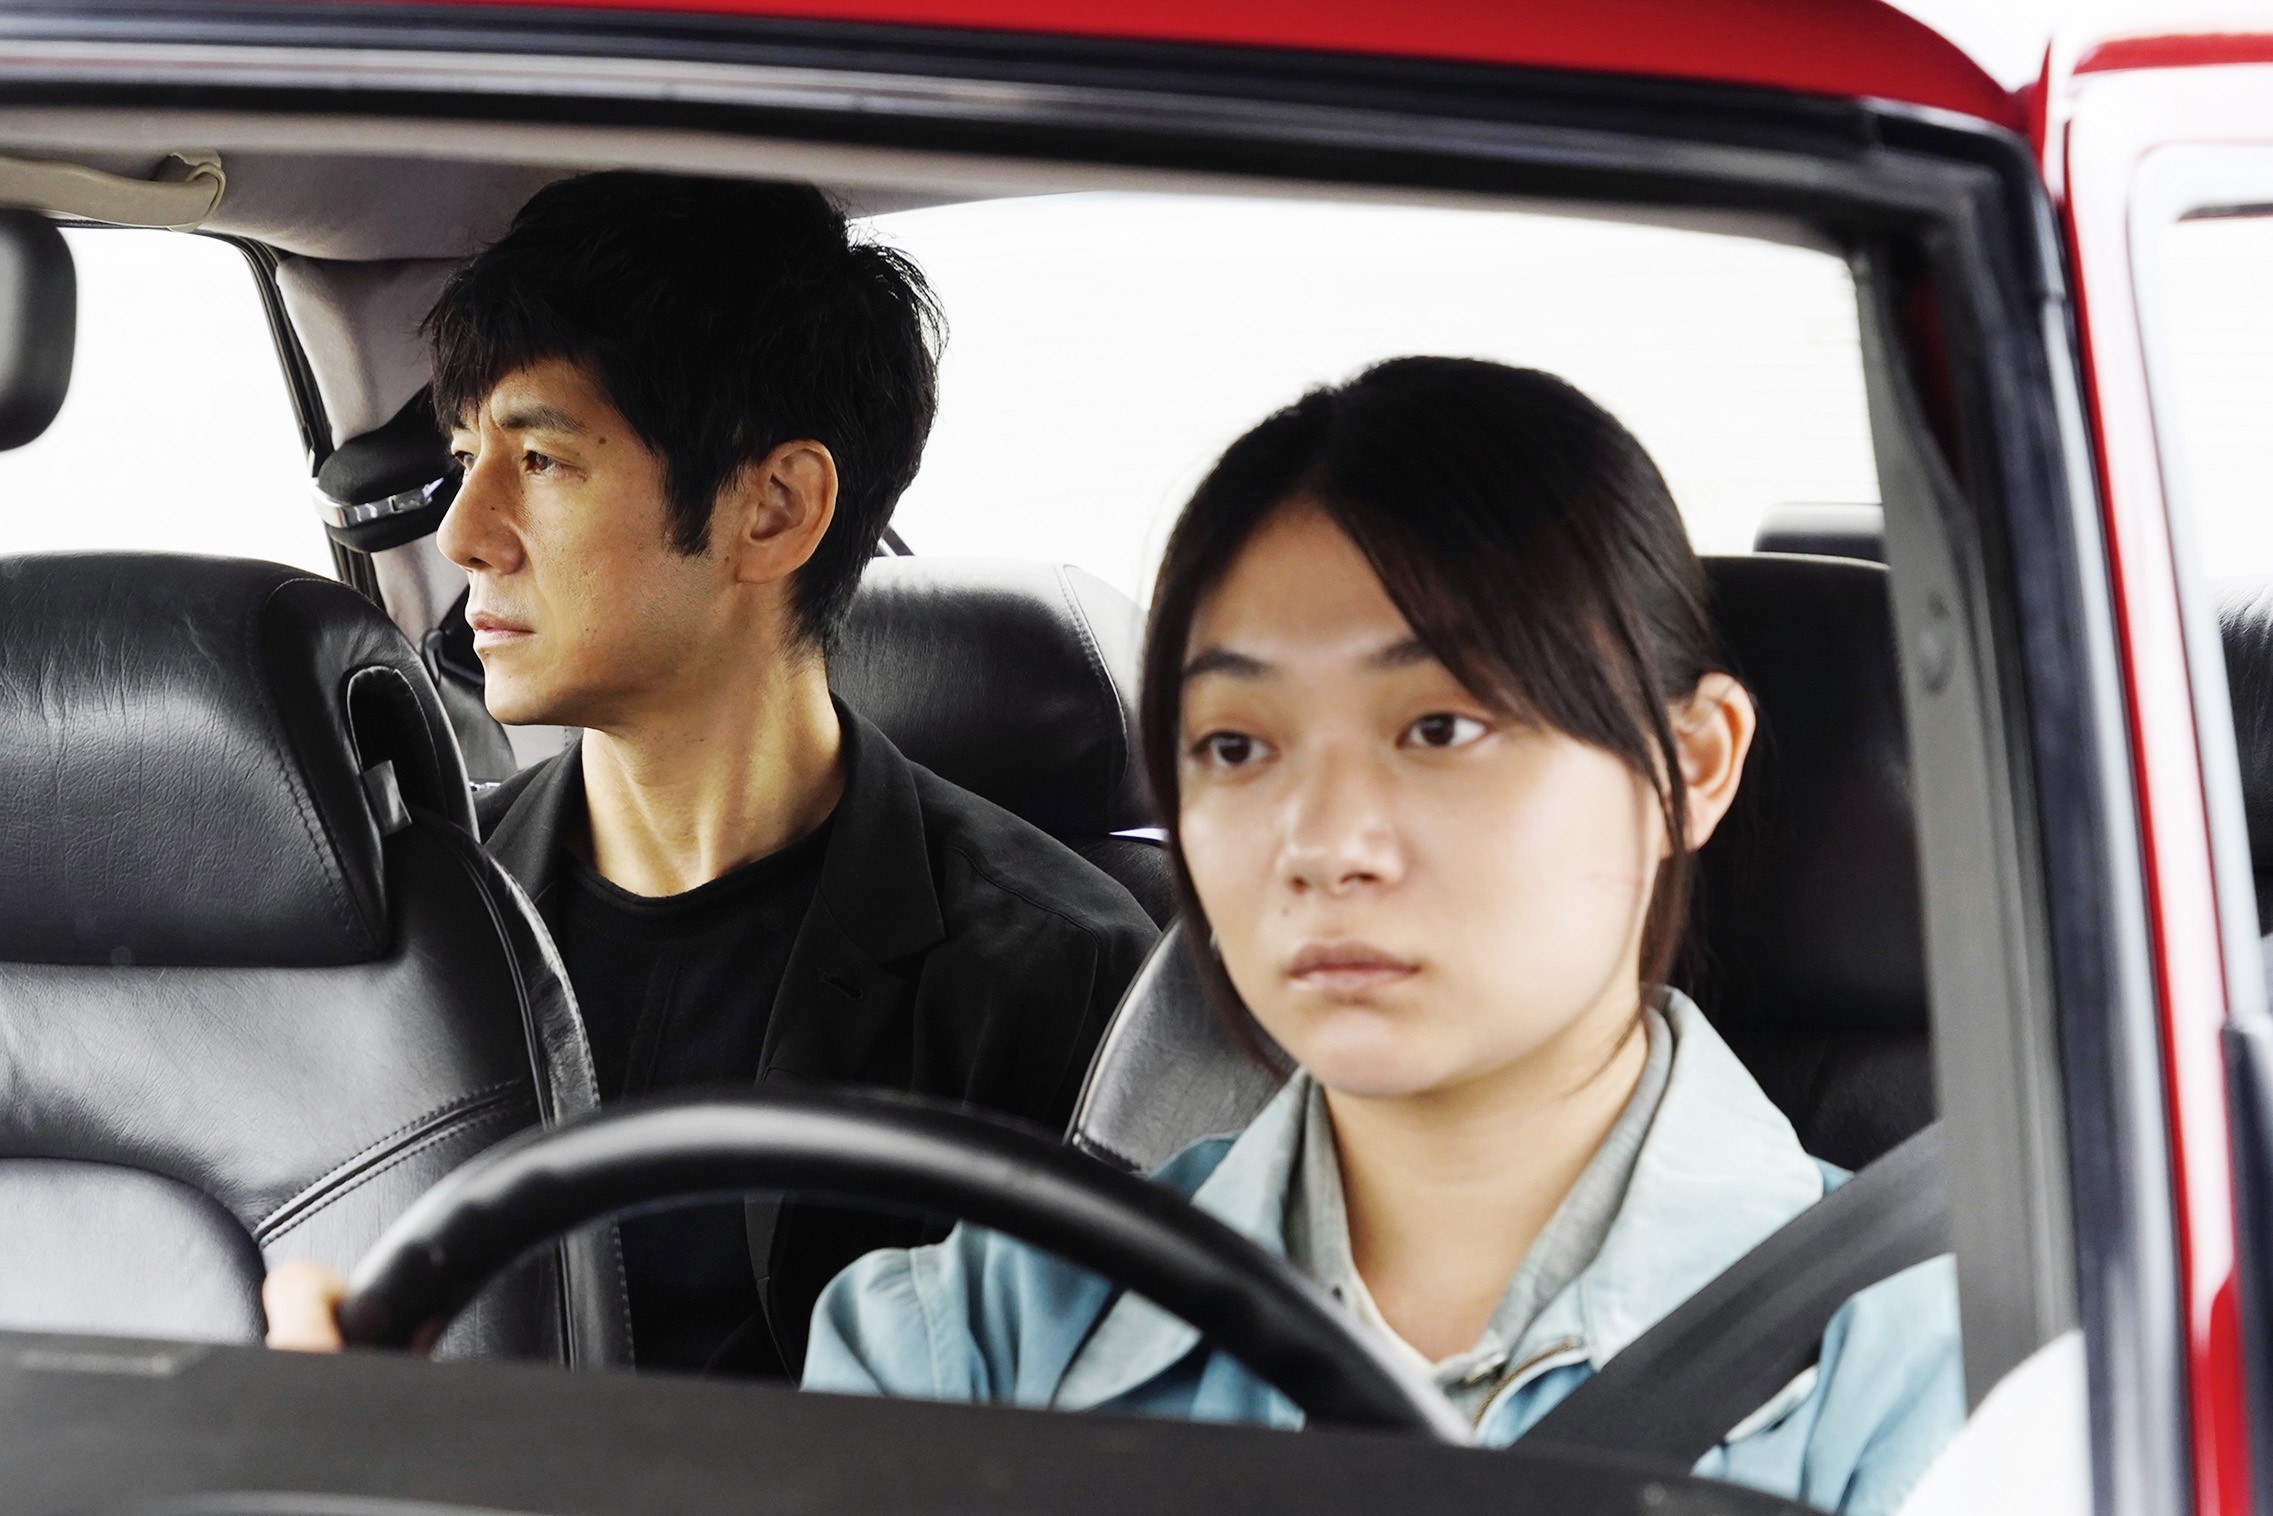 Hidetoshi Nishijima and Toko Miura drive in a car together